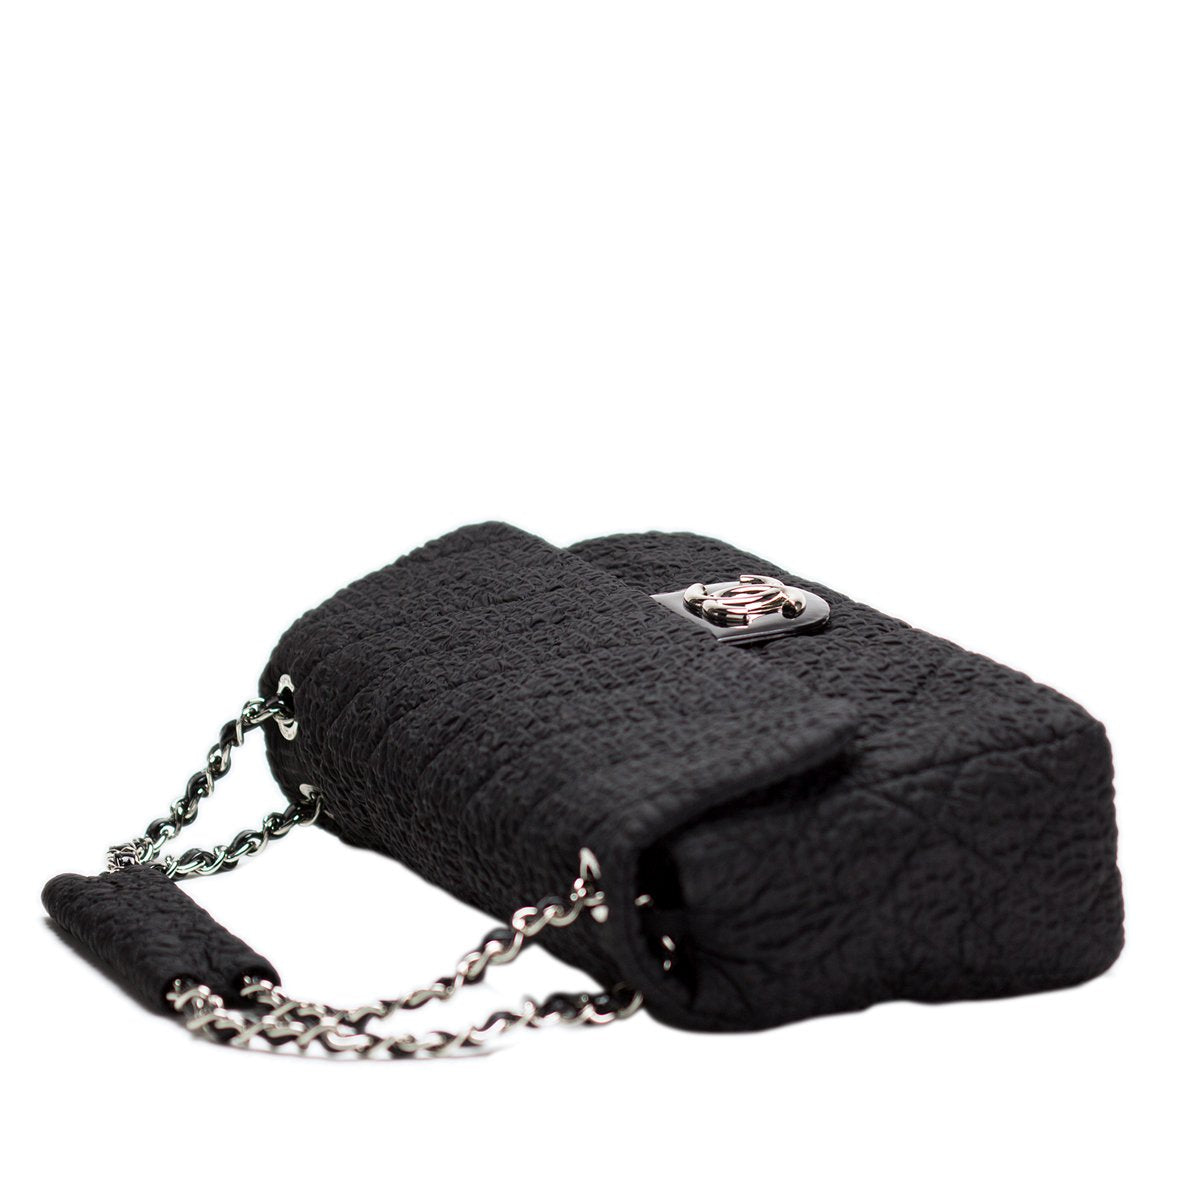 Chanel Classic Flap XL Large Plush Textured Black Microfiber Nylon Shoulder Bag